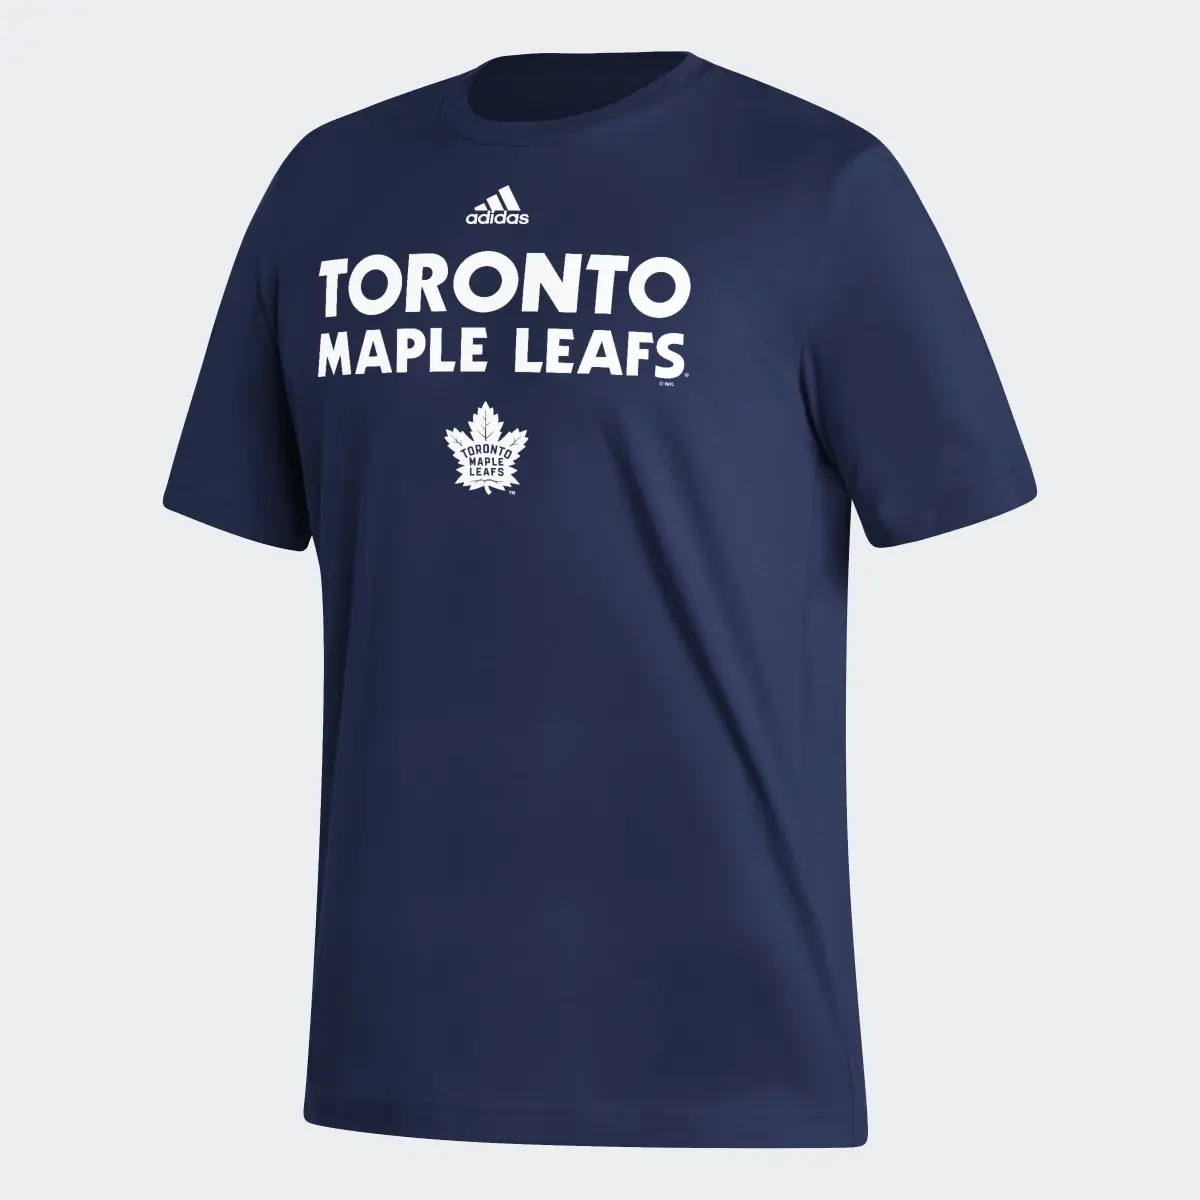 Adidas Maple Leafs Playmaker Tee. 1